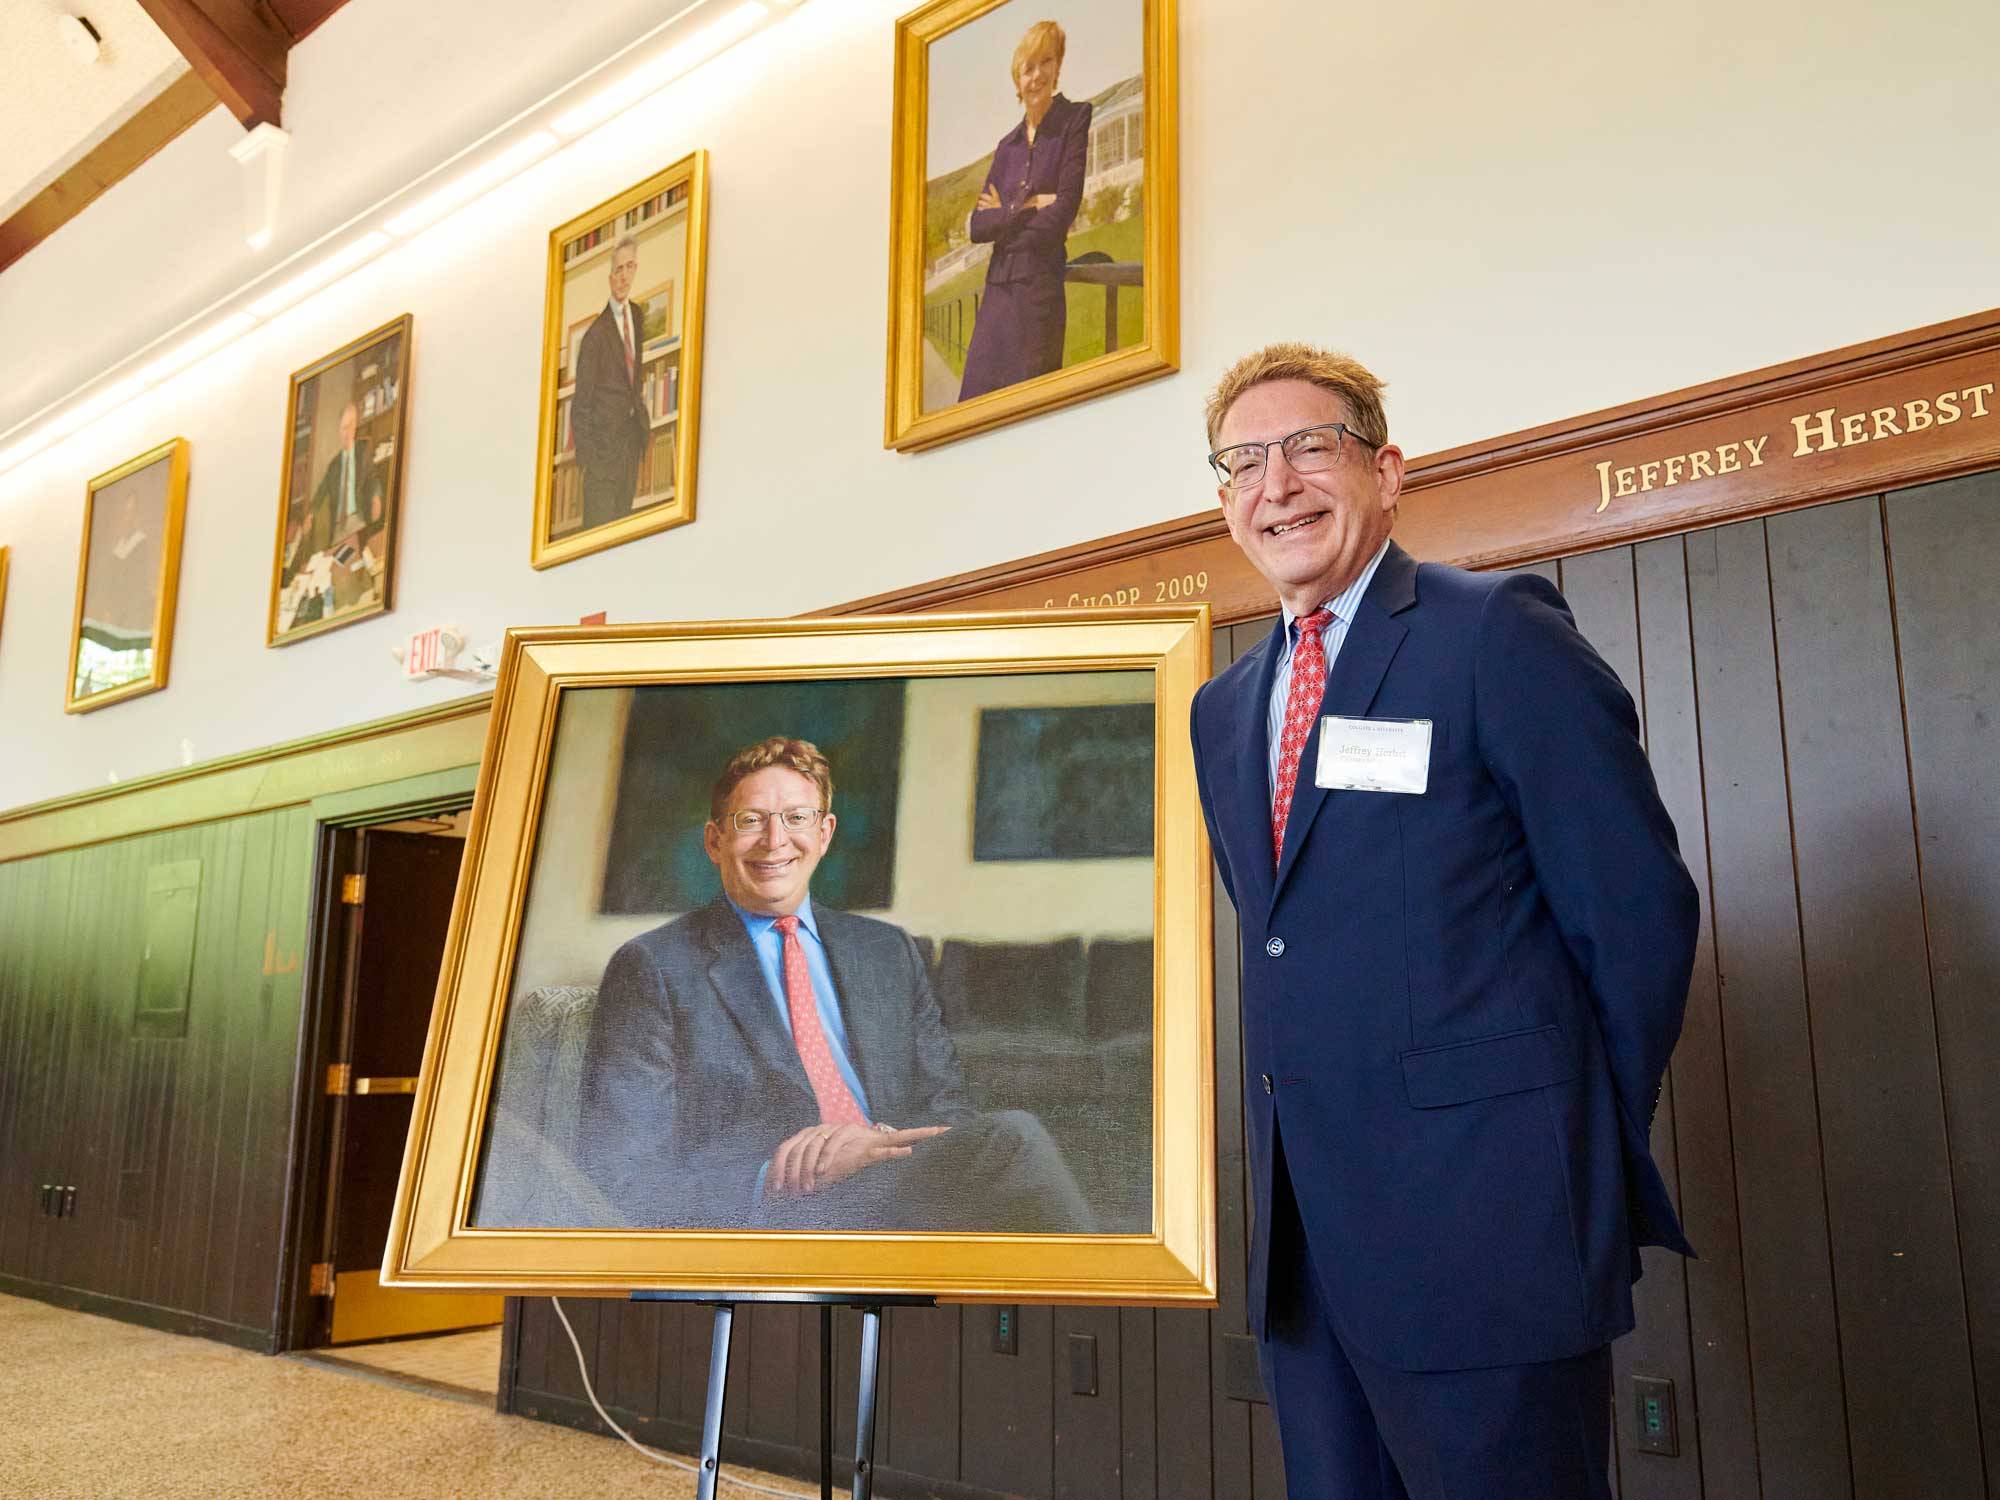 Jeffrey Herbst stands next to his new portrait